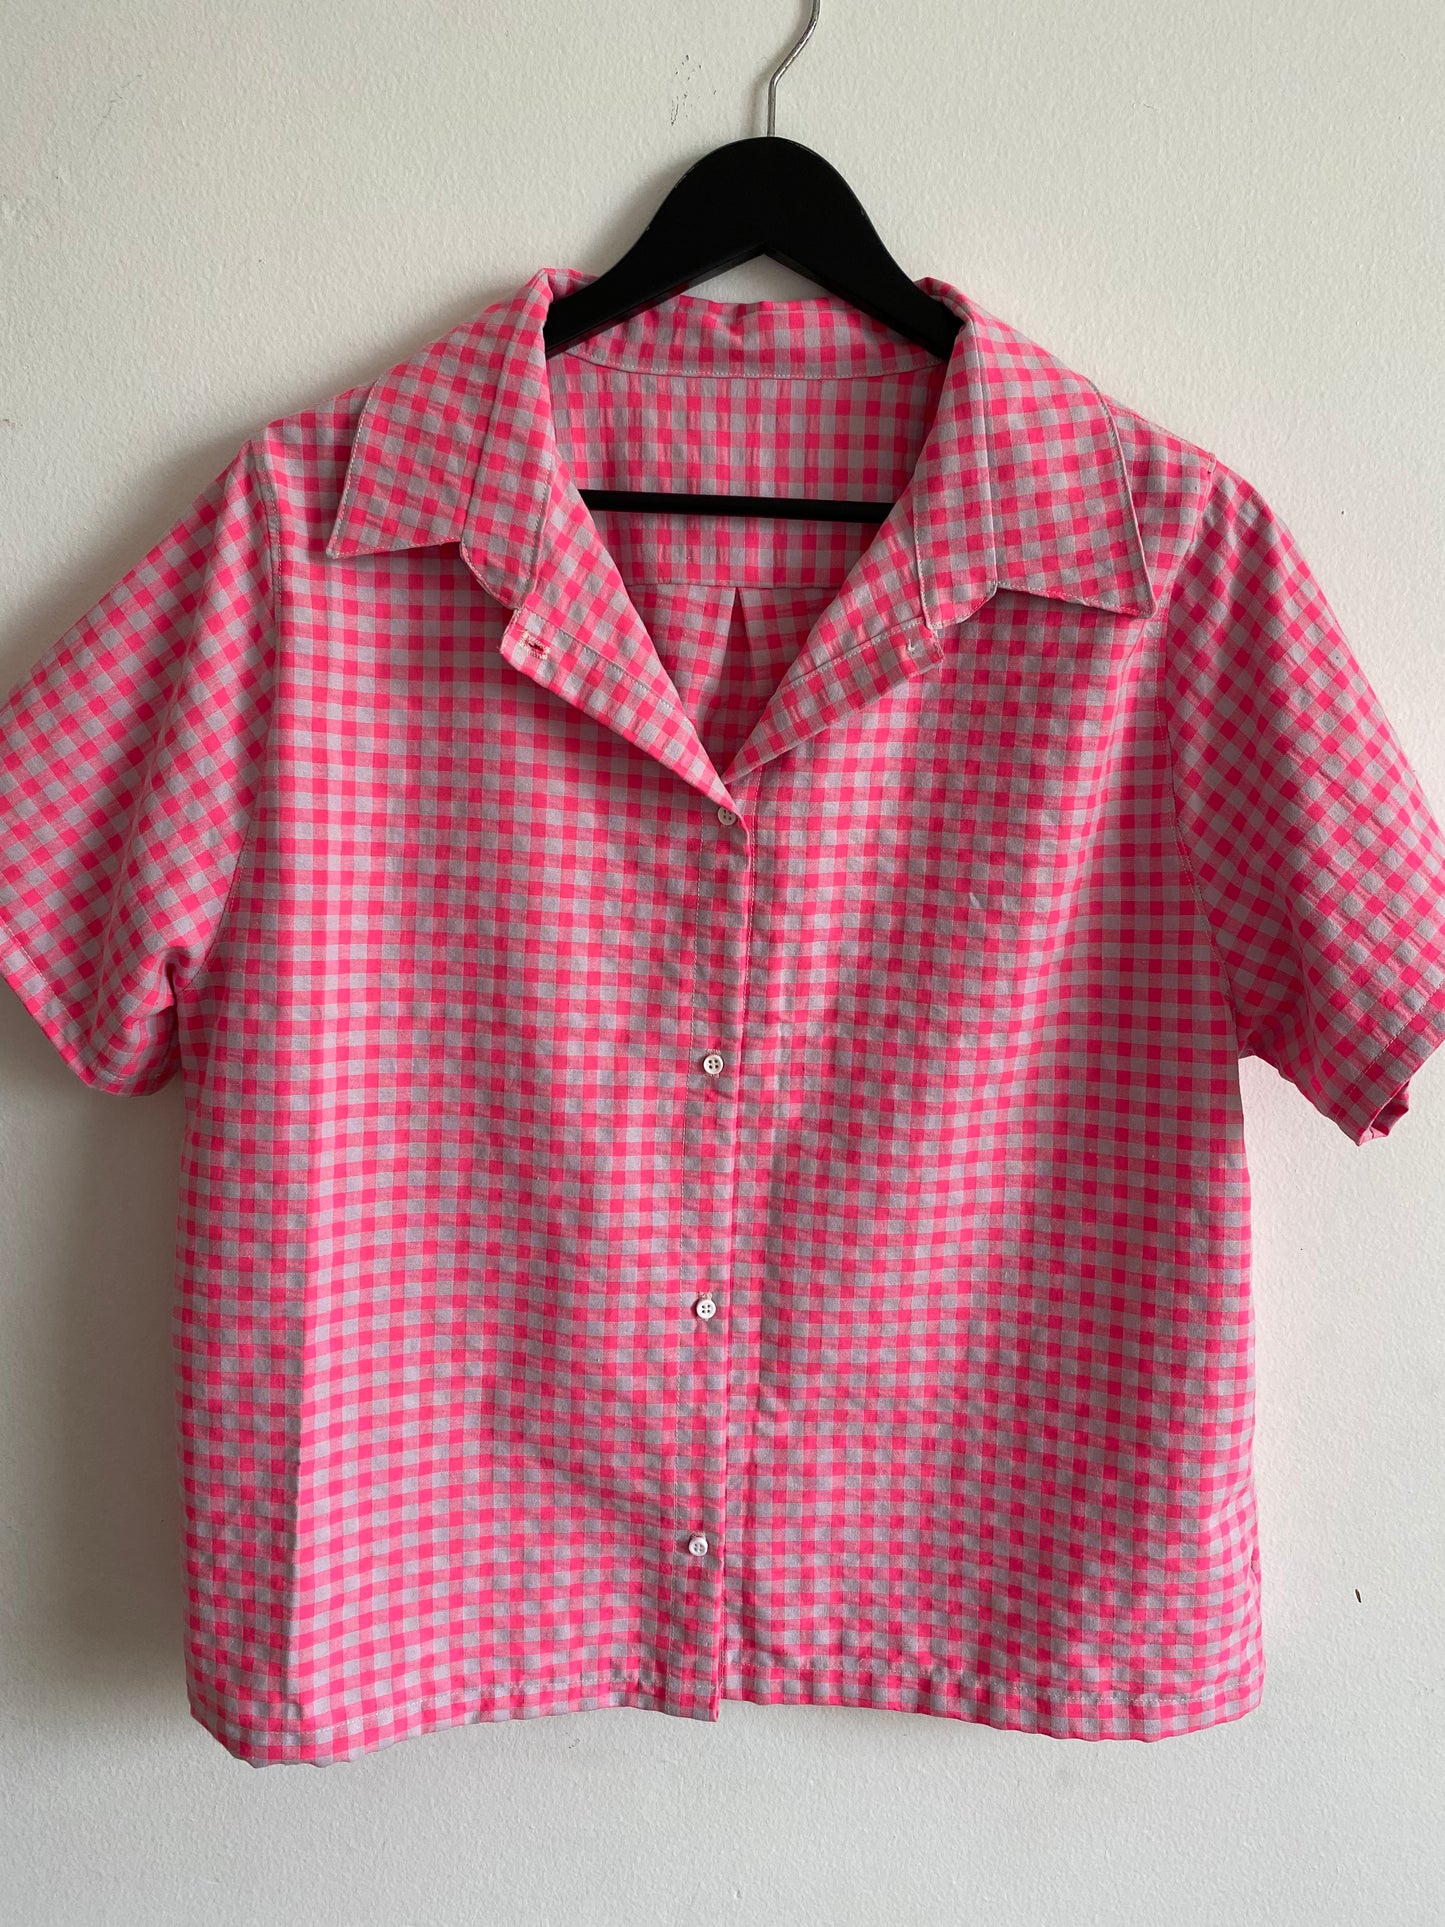 The Porto Pink Shirt